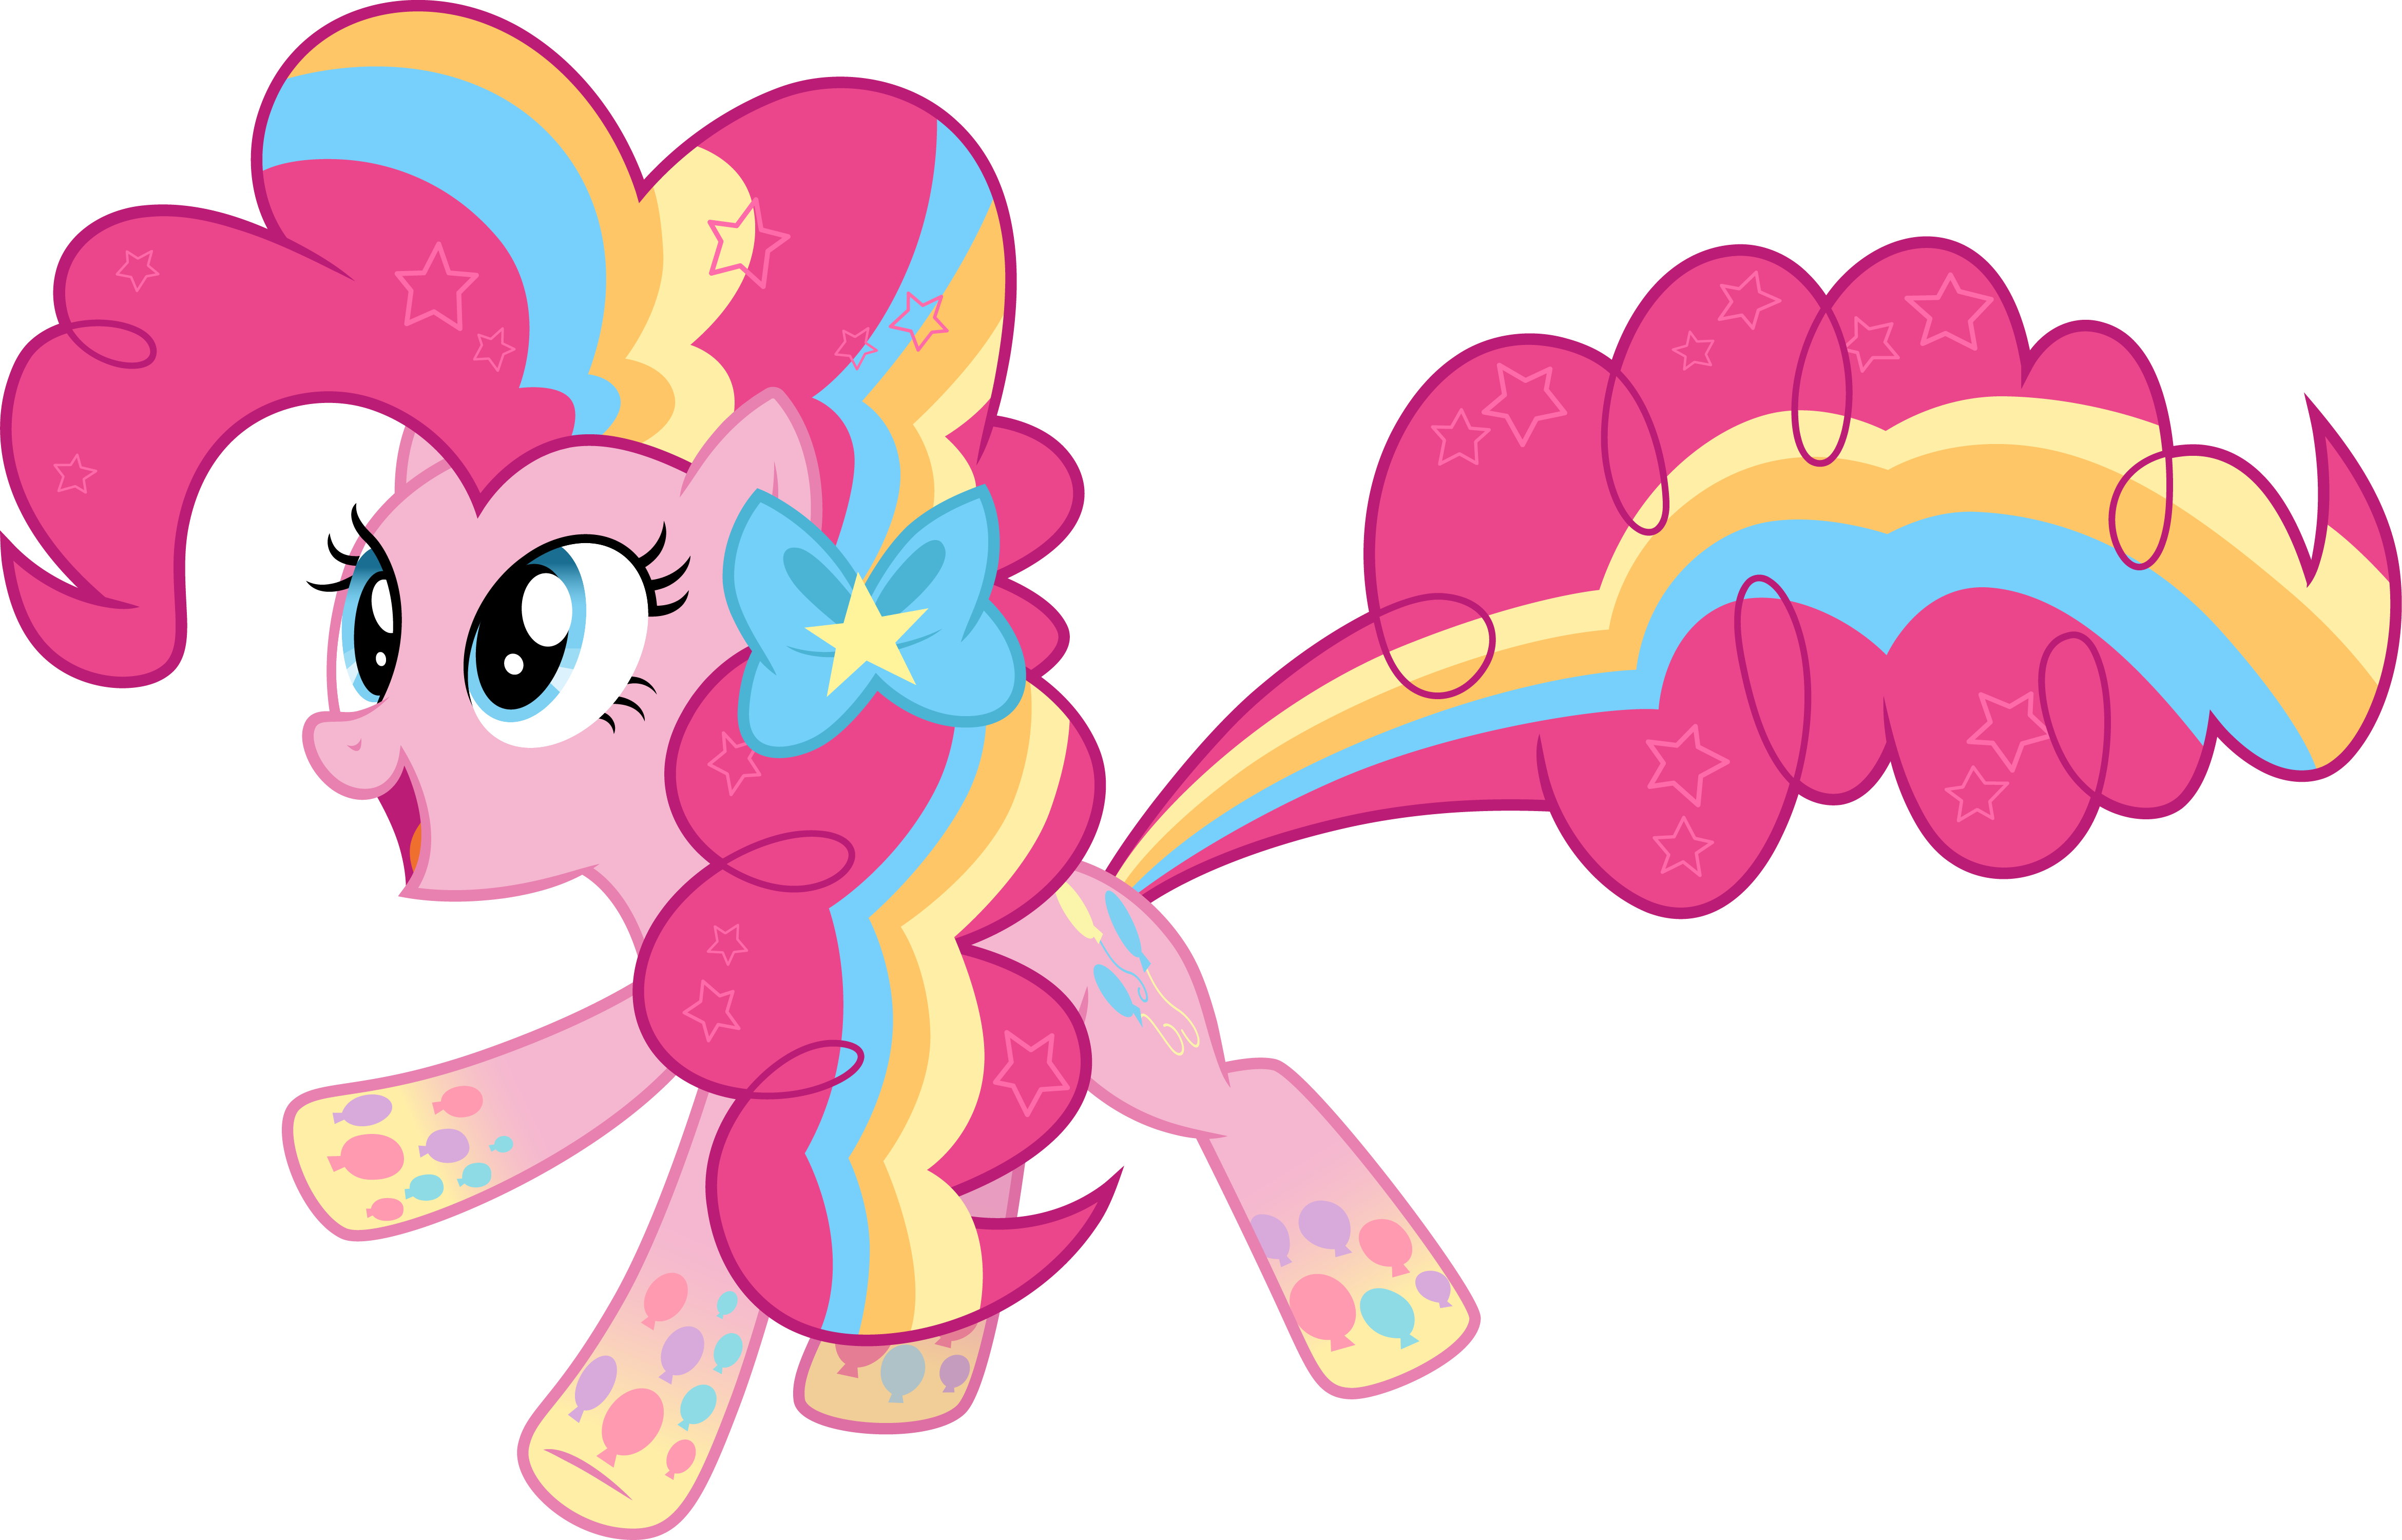 Five My Little Pony characters illustration, Pinkie Pie Rainbow